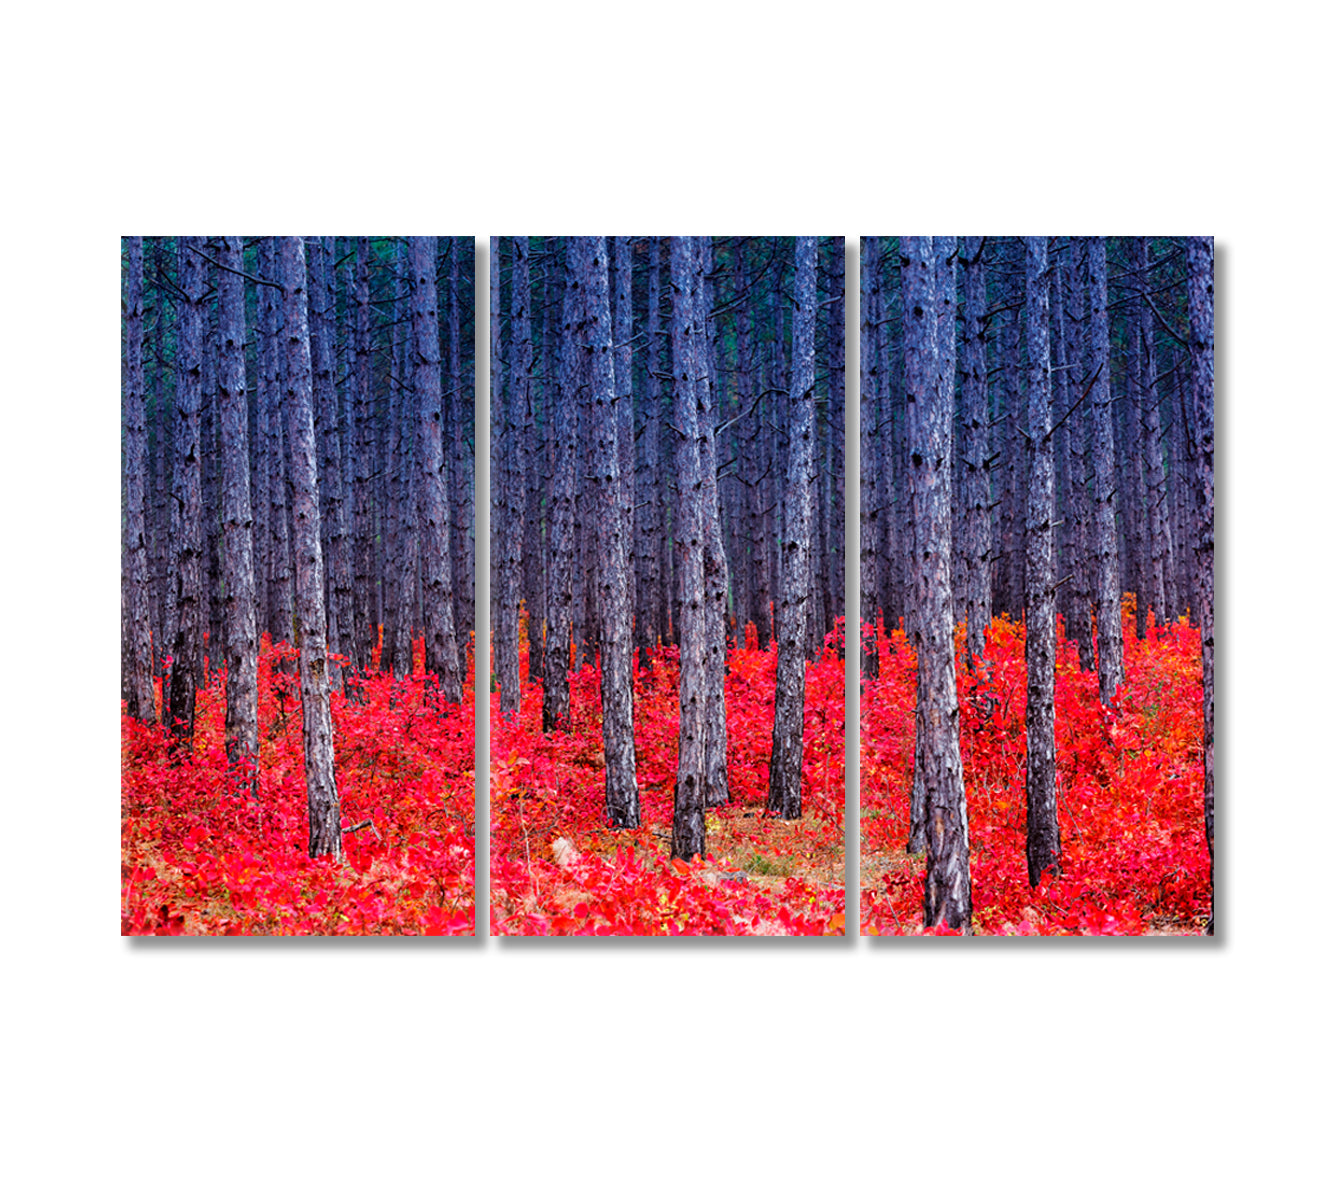 Autumn Birch Forest Canvas Print-Canvas Print-CetArt-3 Panels-36x24 inches-CetArt